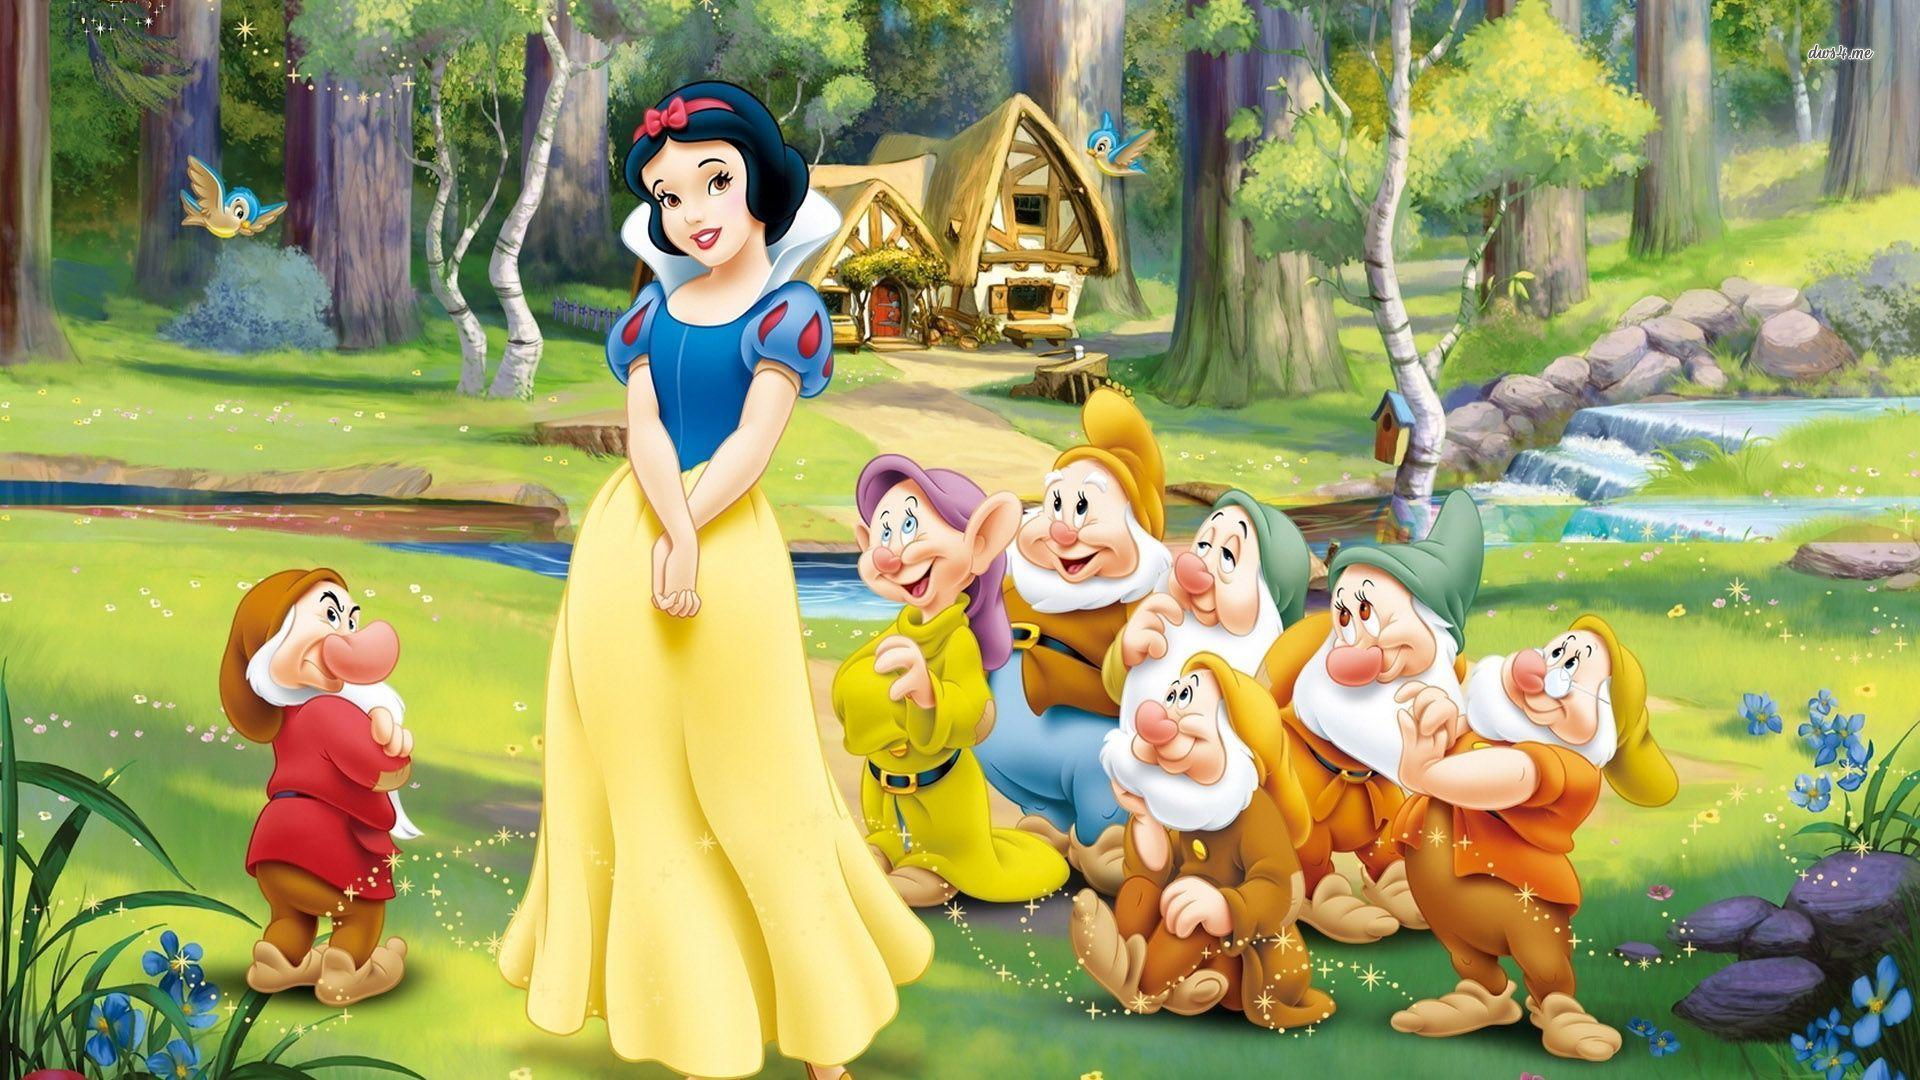 Snow White and the Seven Dwarfs. Movies & TV. Rockstar